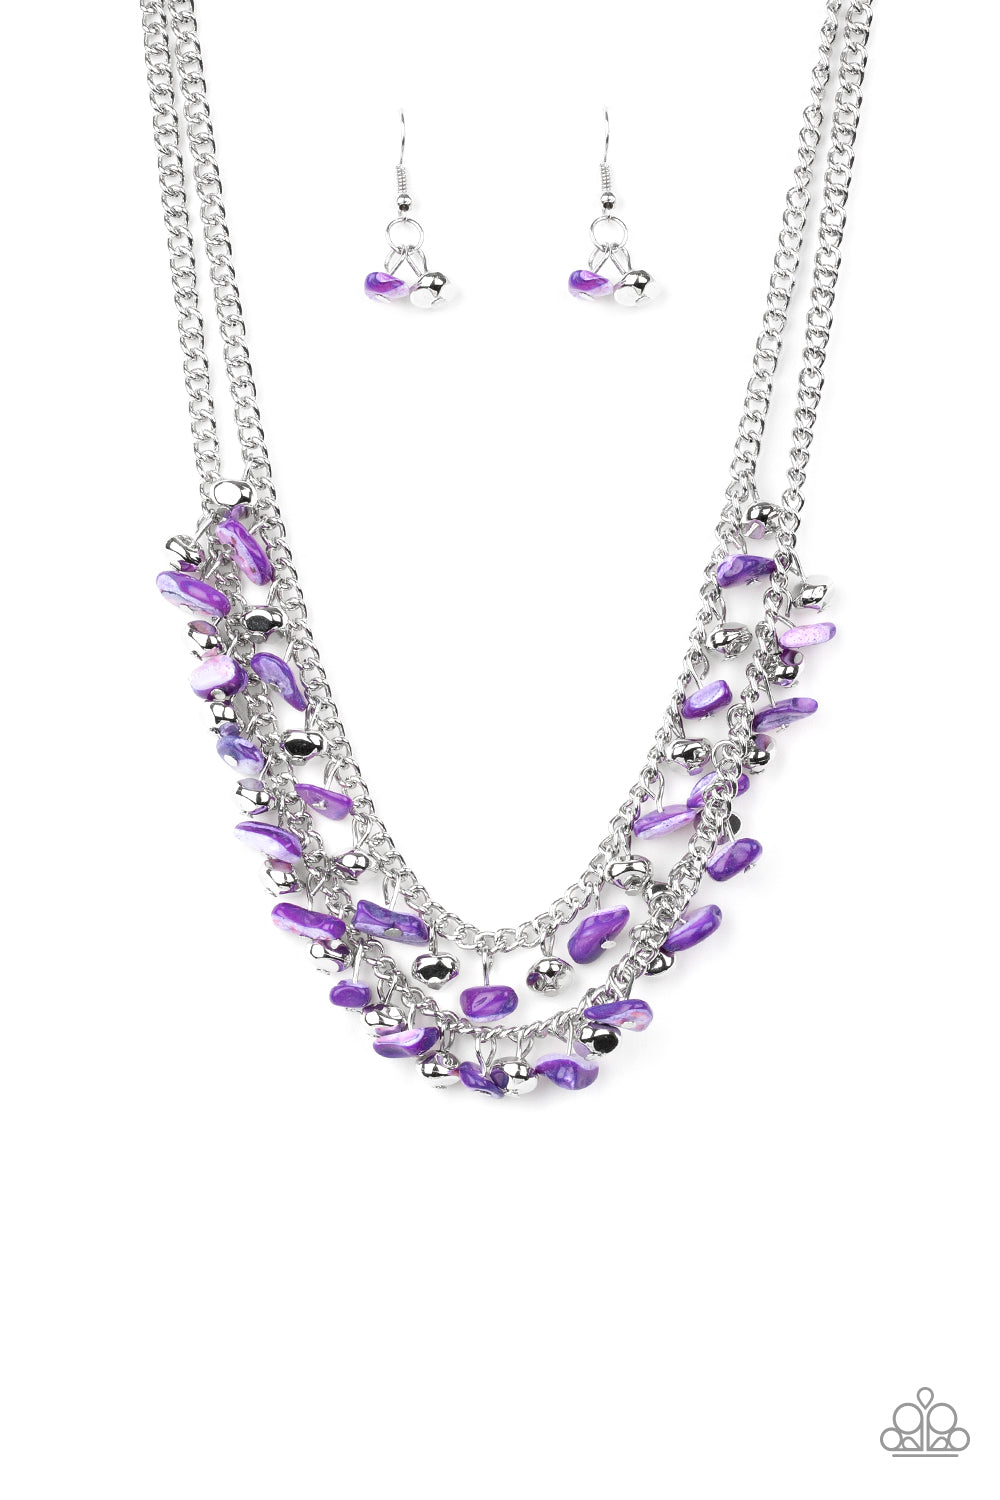 Plentiful Pebbles Purple Paparazzi Bracelet Cashmere Pink Jewels - Cashmere Pink Jewels & Accessories, Cashmere Pink Jewels & Accessories - Paparazzi